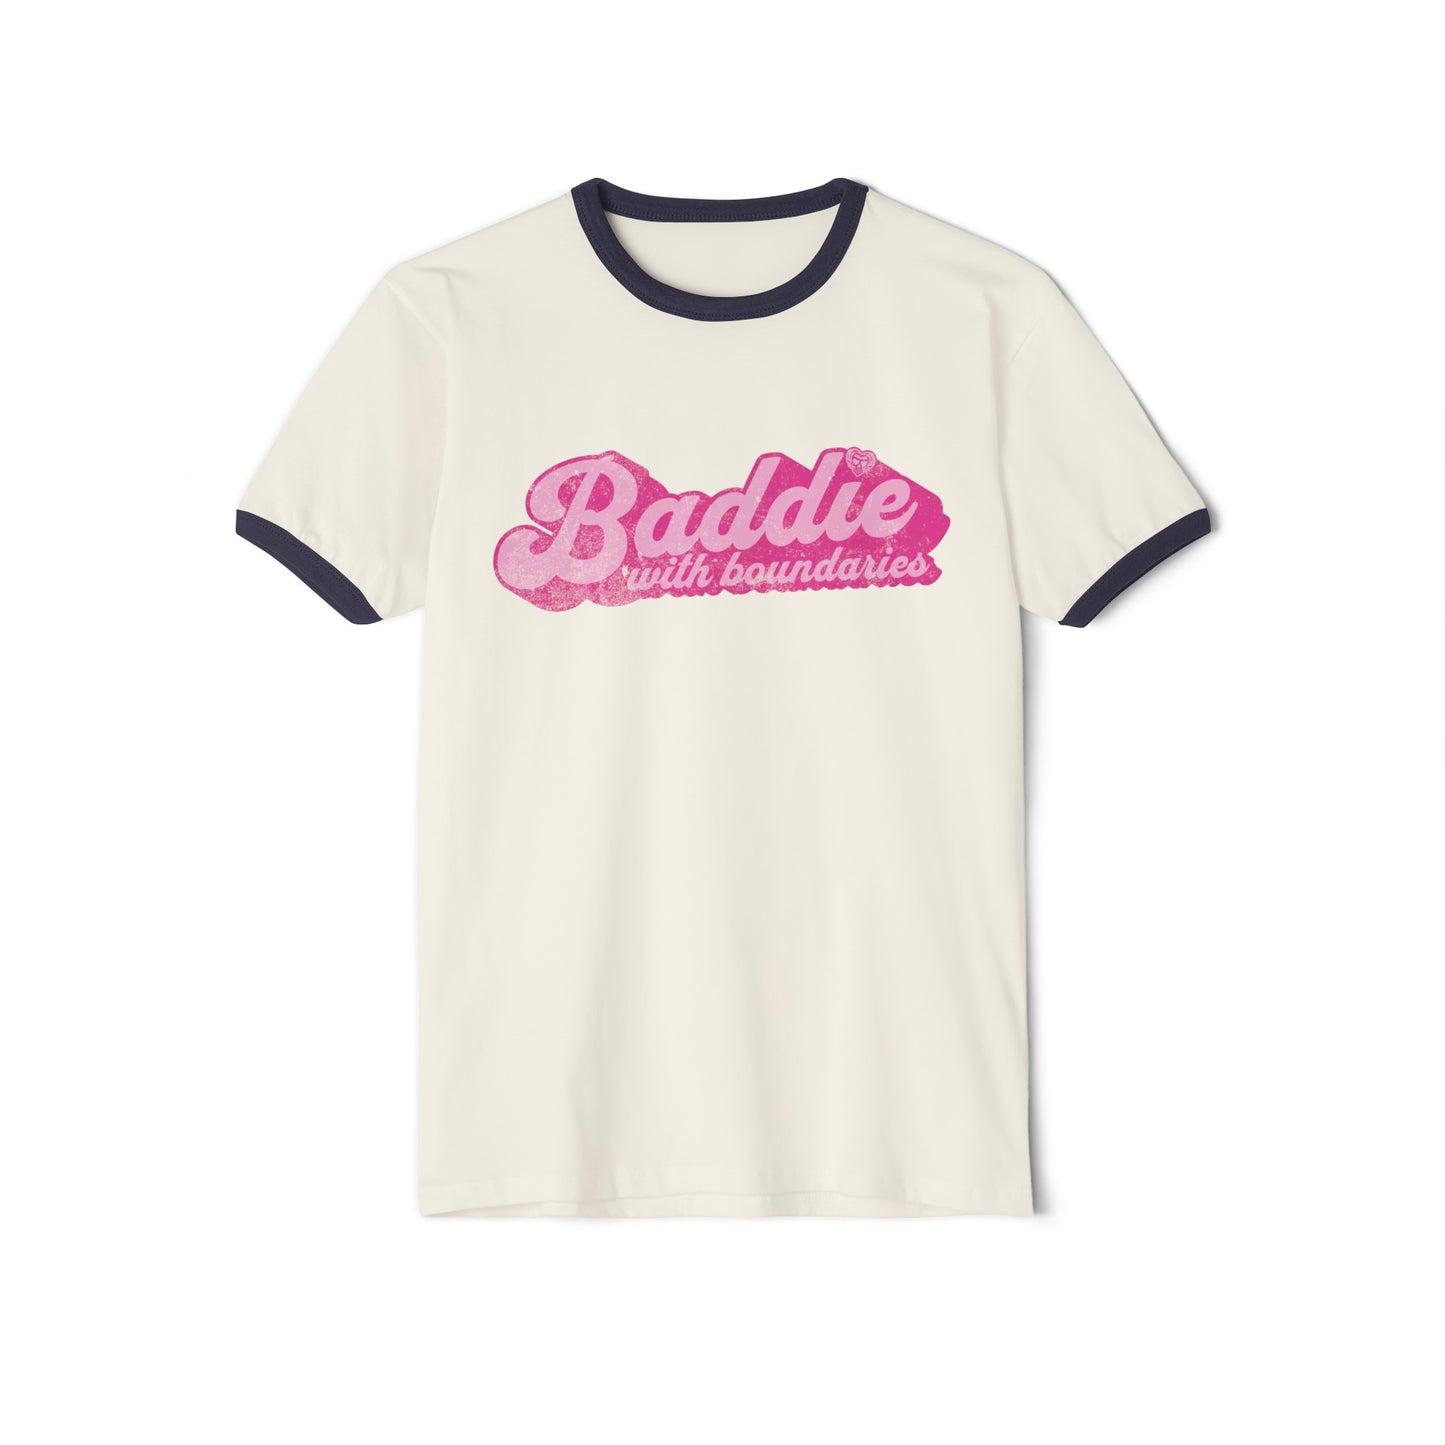 Baddie with Boundaries Ringer T-Shirt Natural Midnight Navy